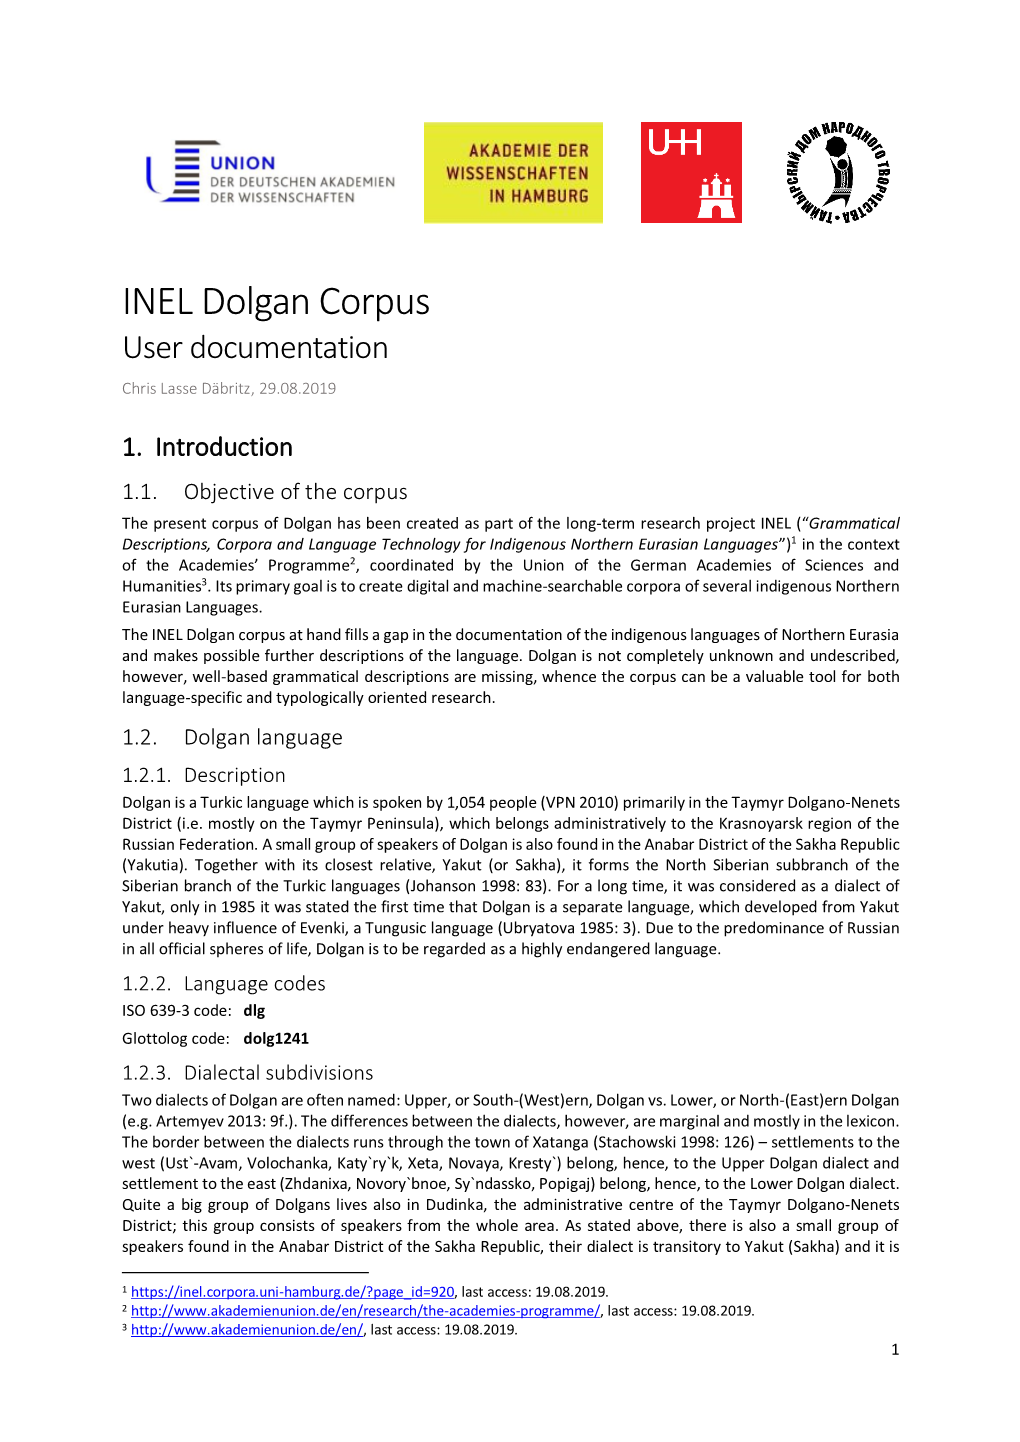 INEL Dolgan Corpus User Documentation Chris Lasse Däbritz, 29.08.2019